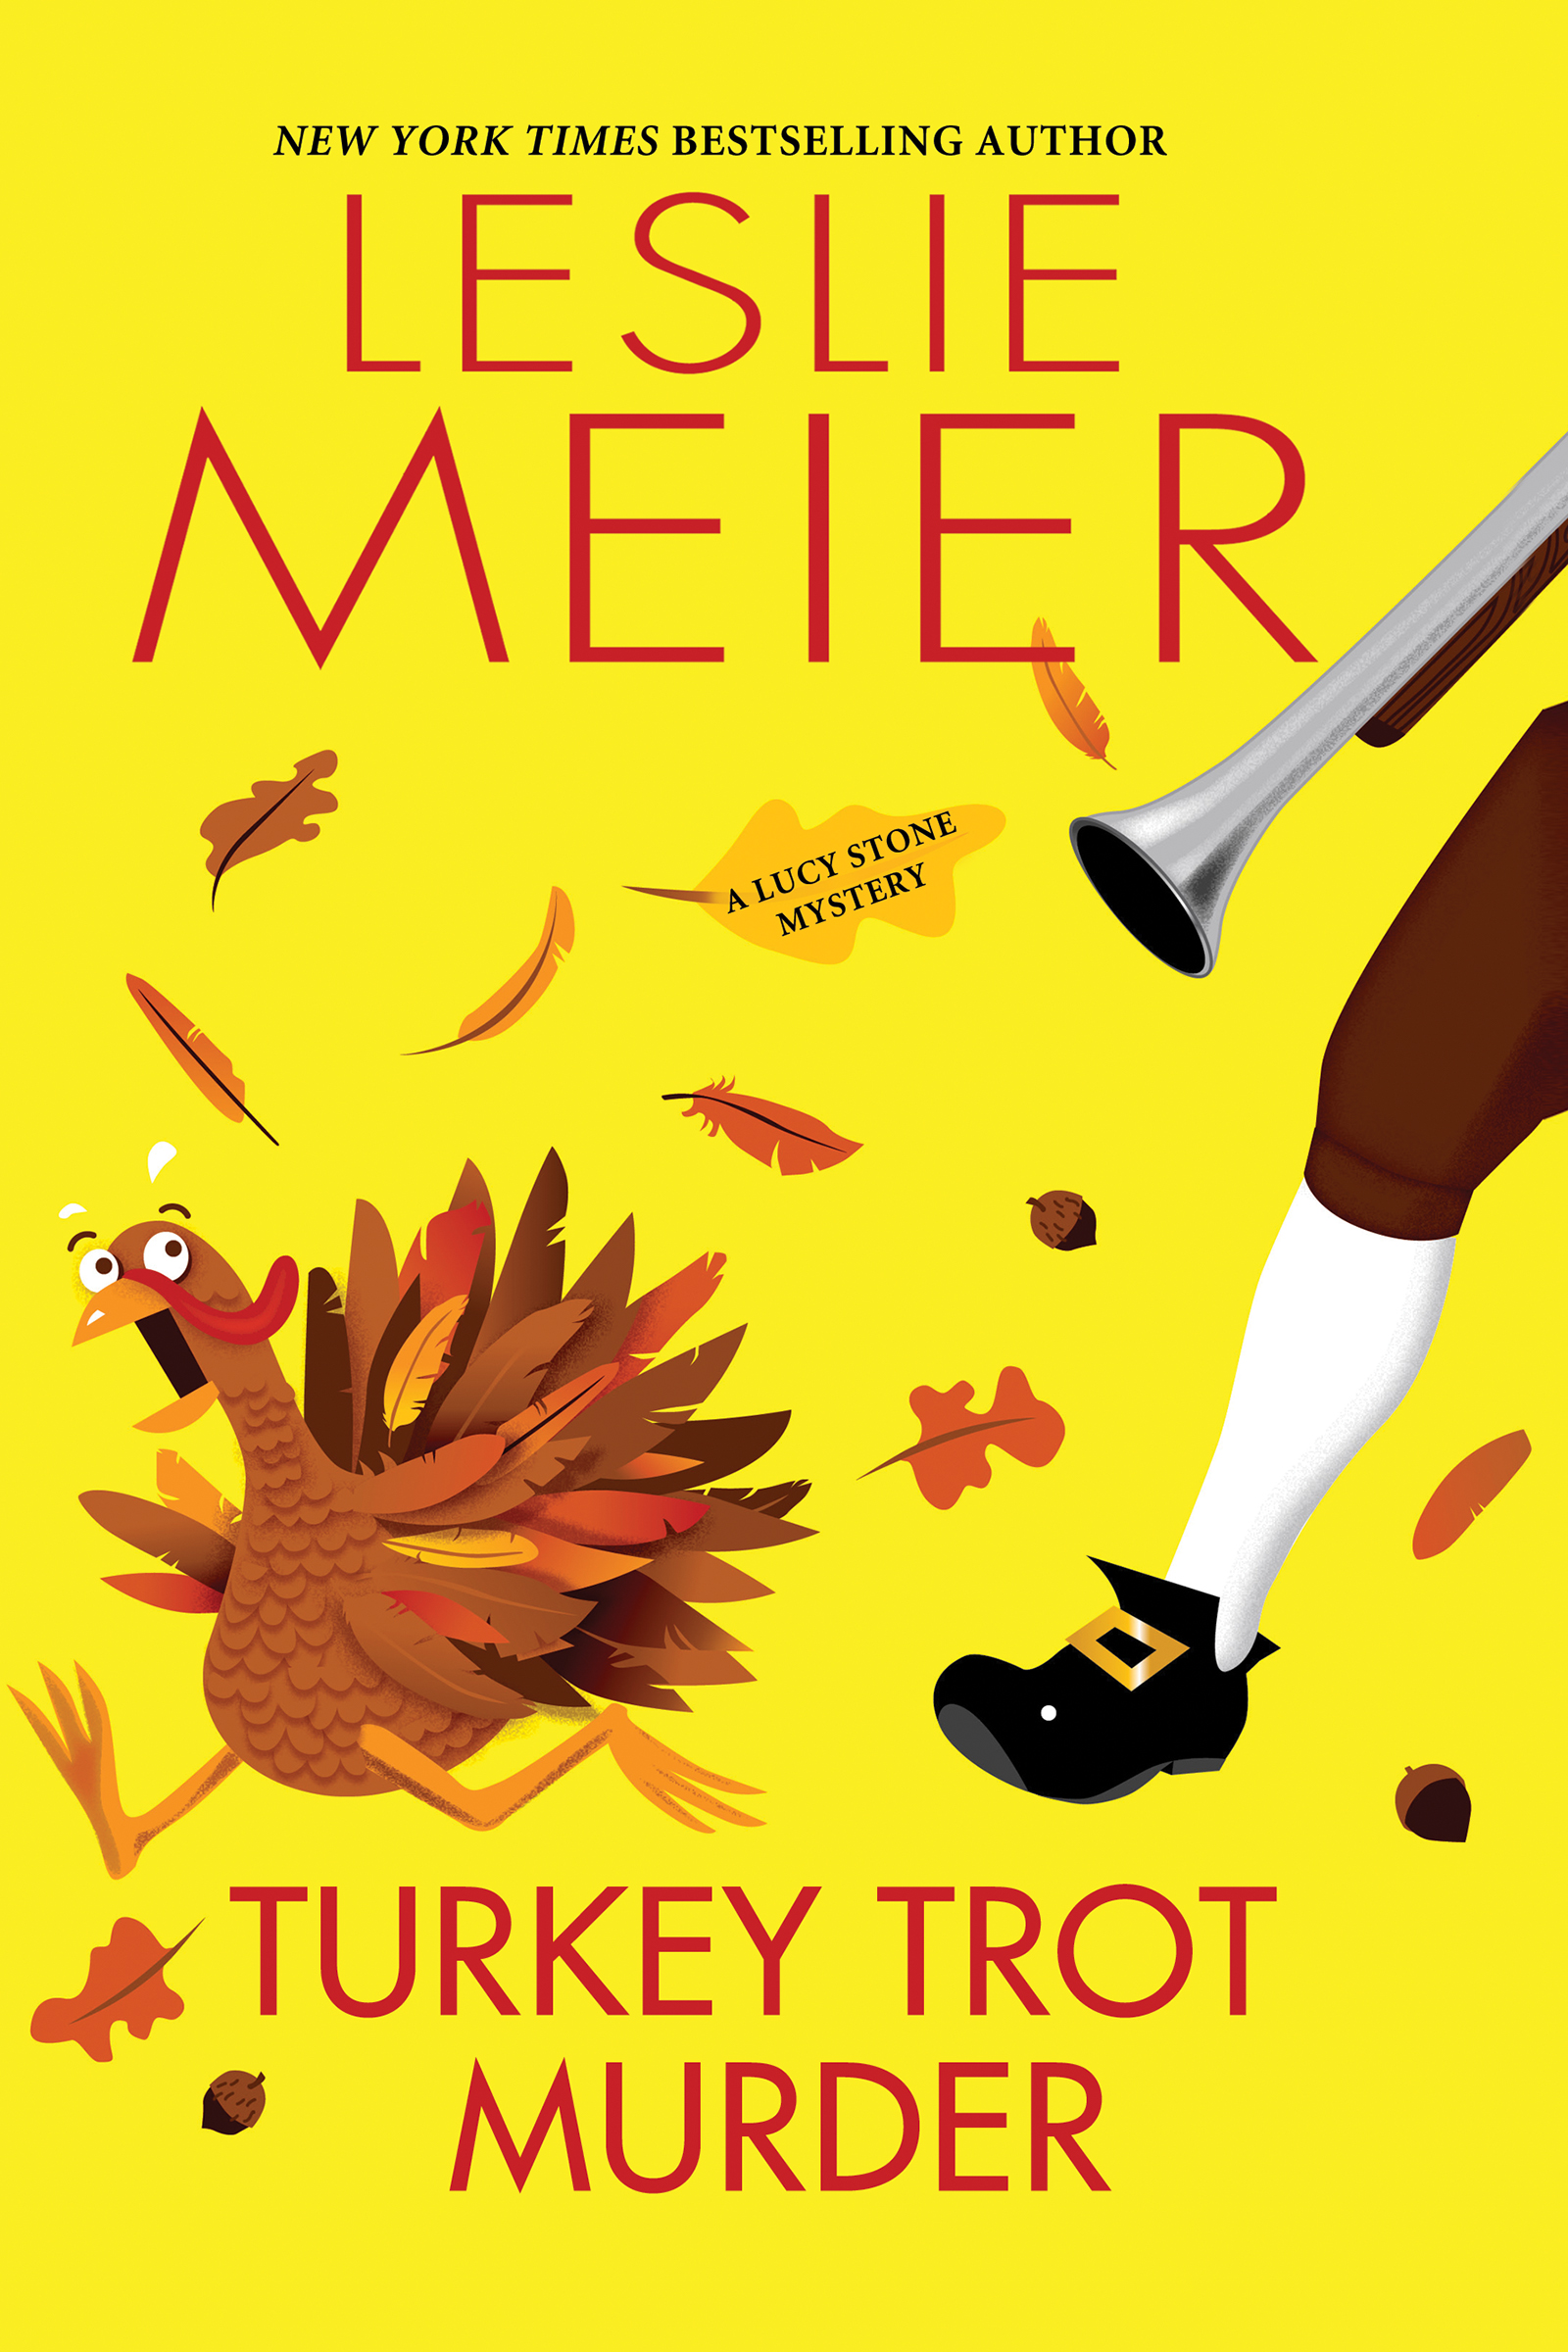 Turkey trot murder cover image